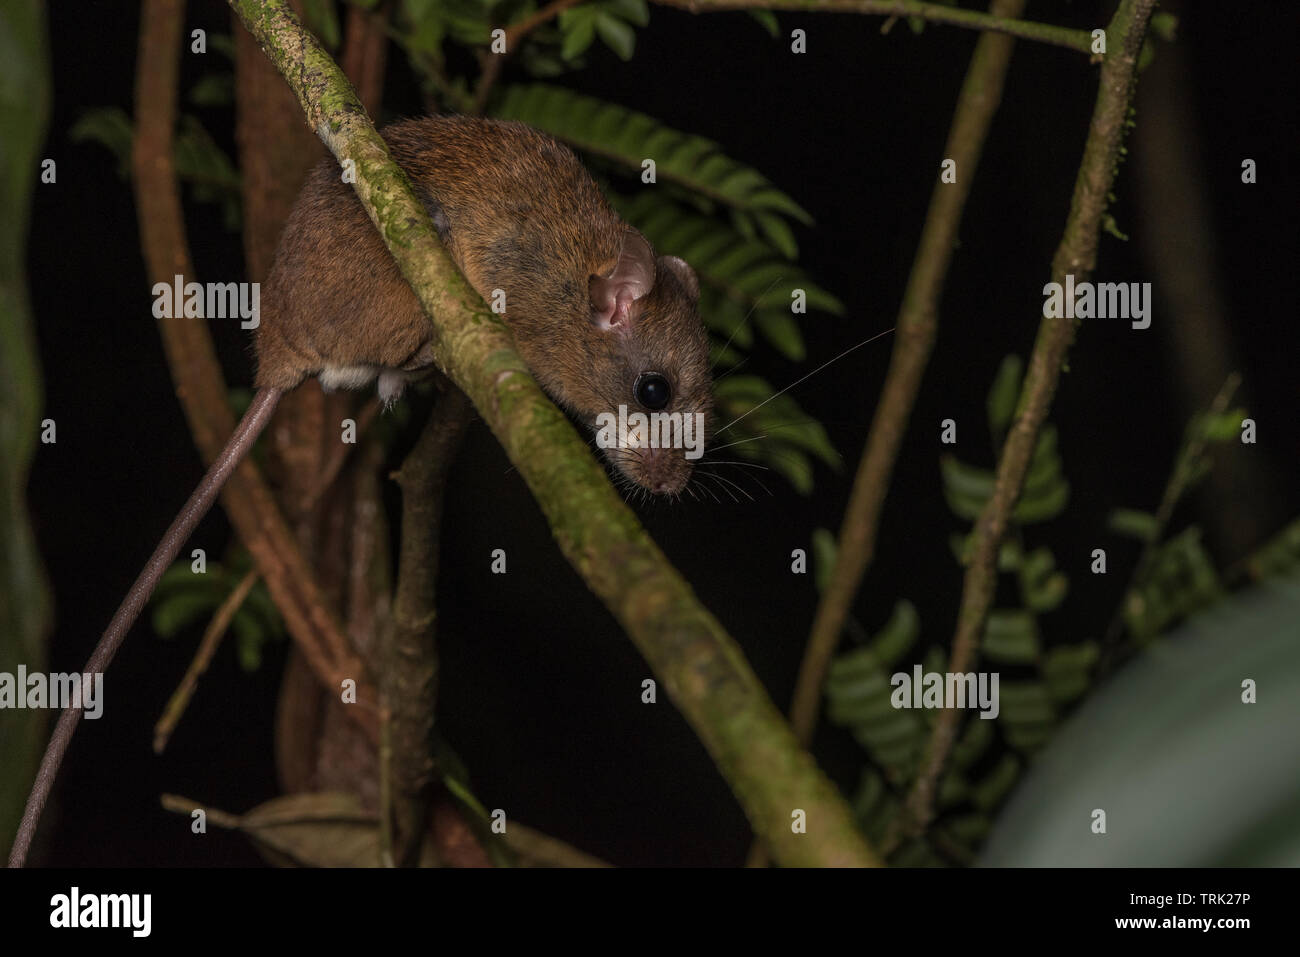 A arboreal mouse (Oecomys sp) from the Ecuadorian Amazon rainforest in yasuni national park. Stock Photo